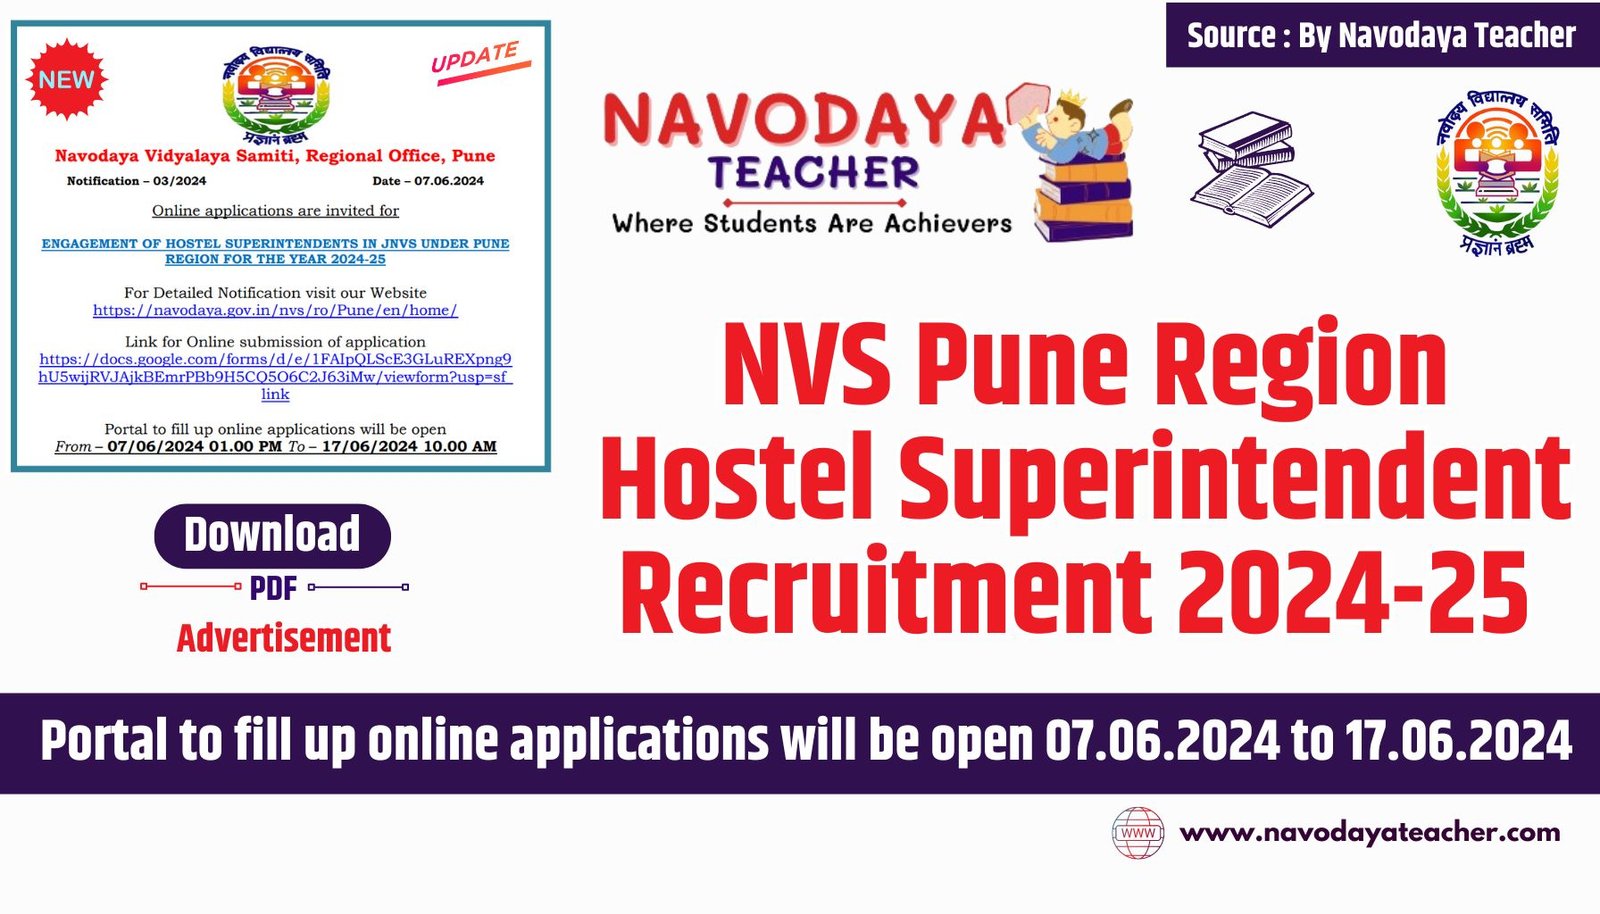 NVS Pune Region Hostel Superintendent Recruitment 2024-25